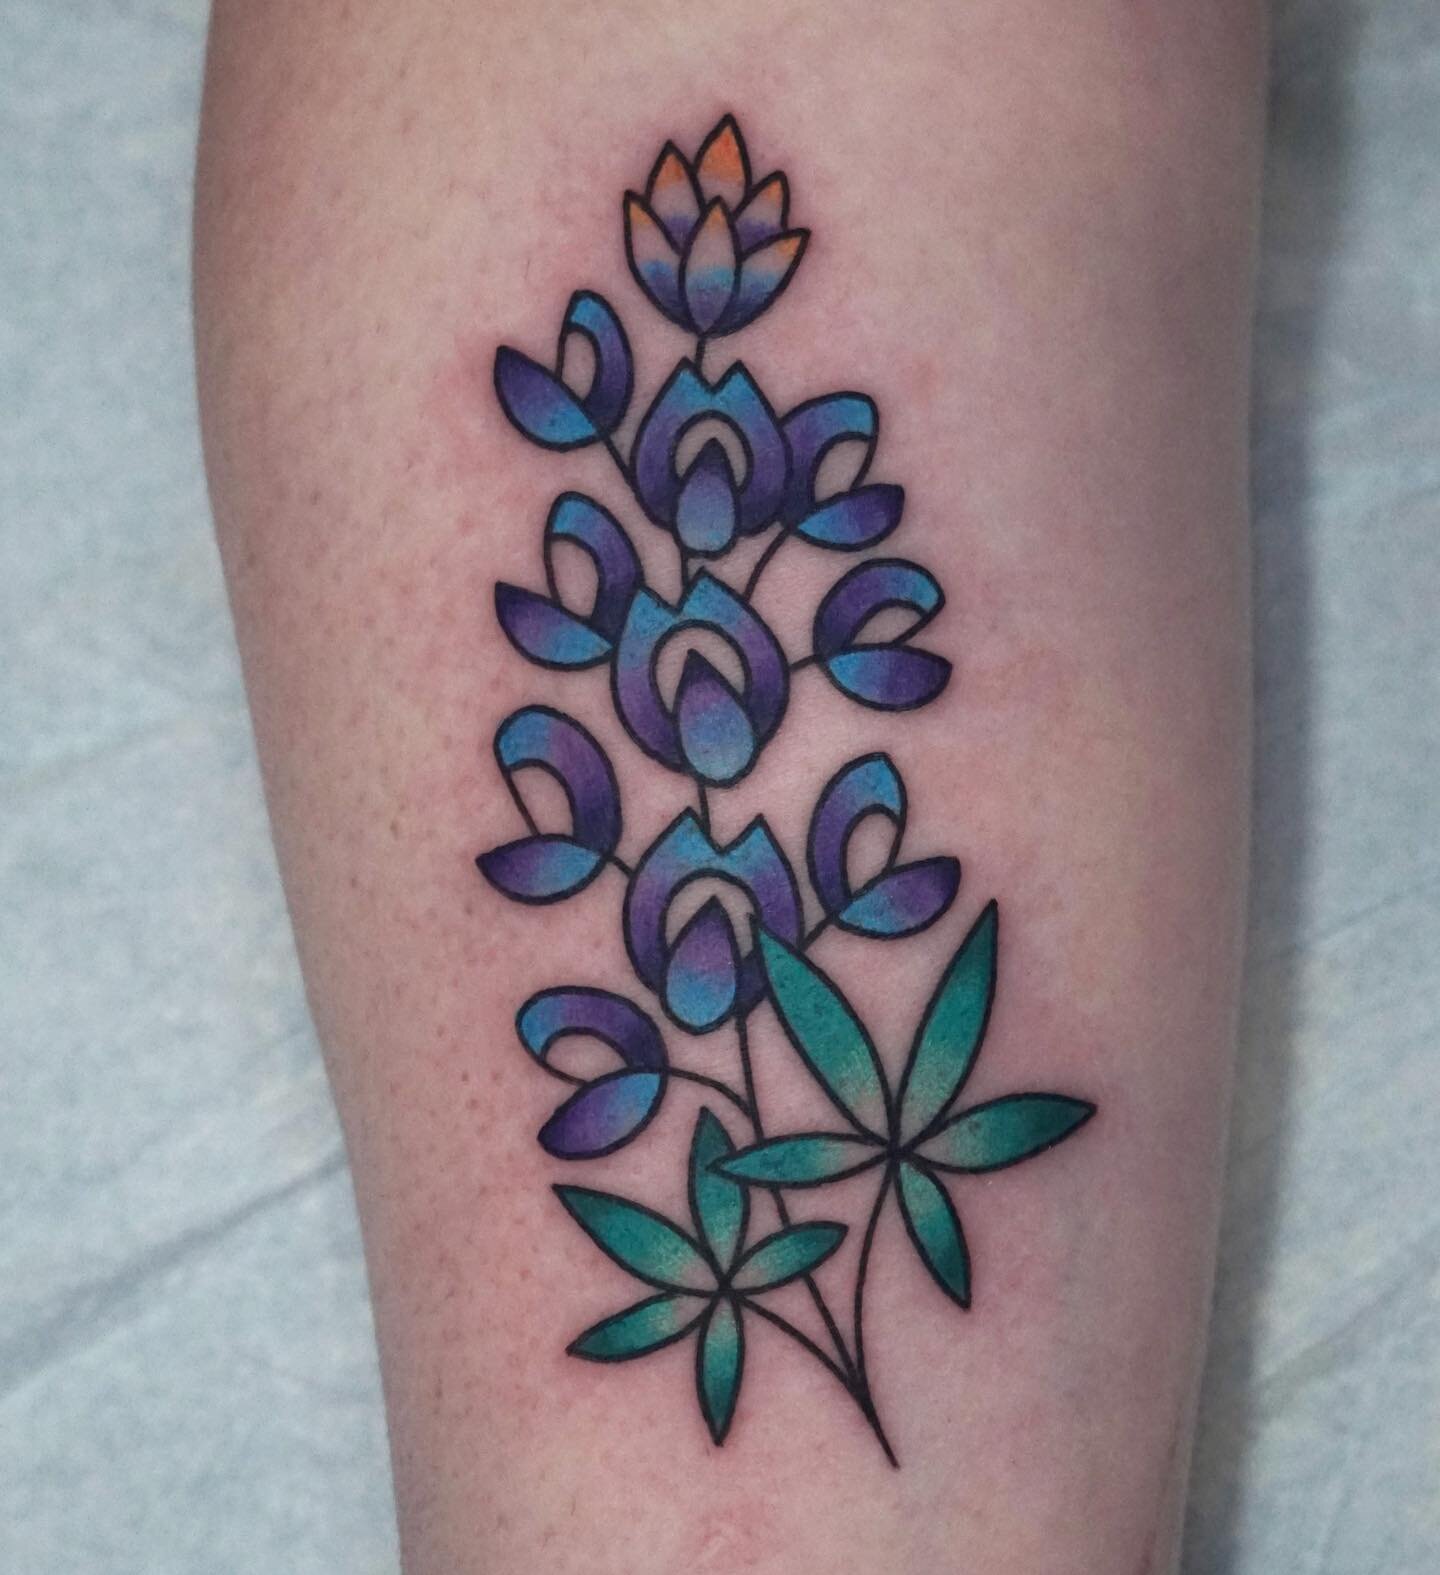 My texas flower tattoo My design done by DJ at Superchango tattoos in  Spring TX  Sleeve tattoos Full sleeve tattoos Tattoos